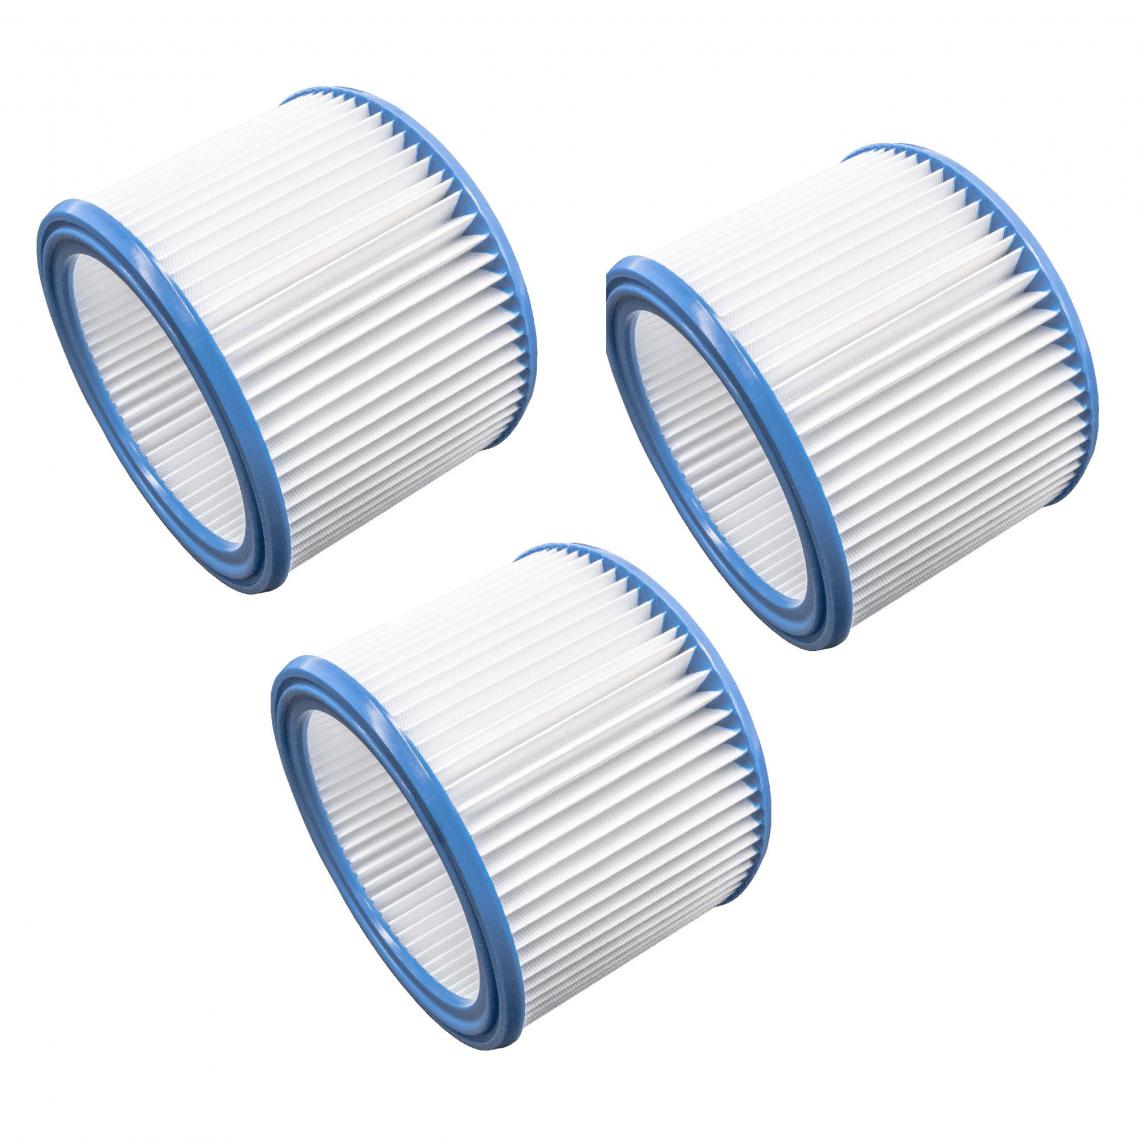 Vhbw - vhbw Set de filtres 3x Filtre plissé compatible avec JMP Inox 35 aspirateur à sec ou humide - Filtre à cartouche - Accessoire entretien des sols